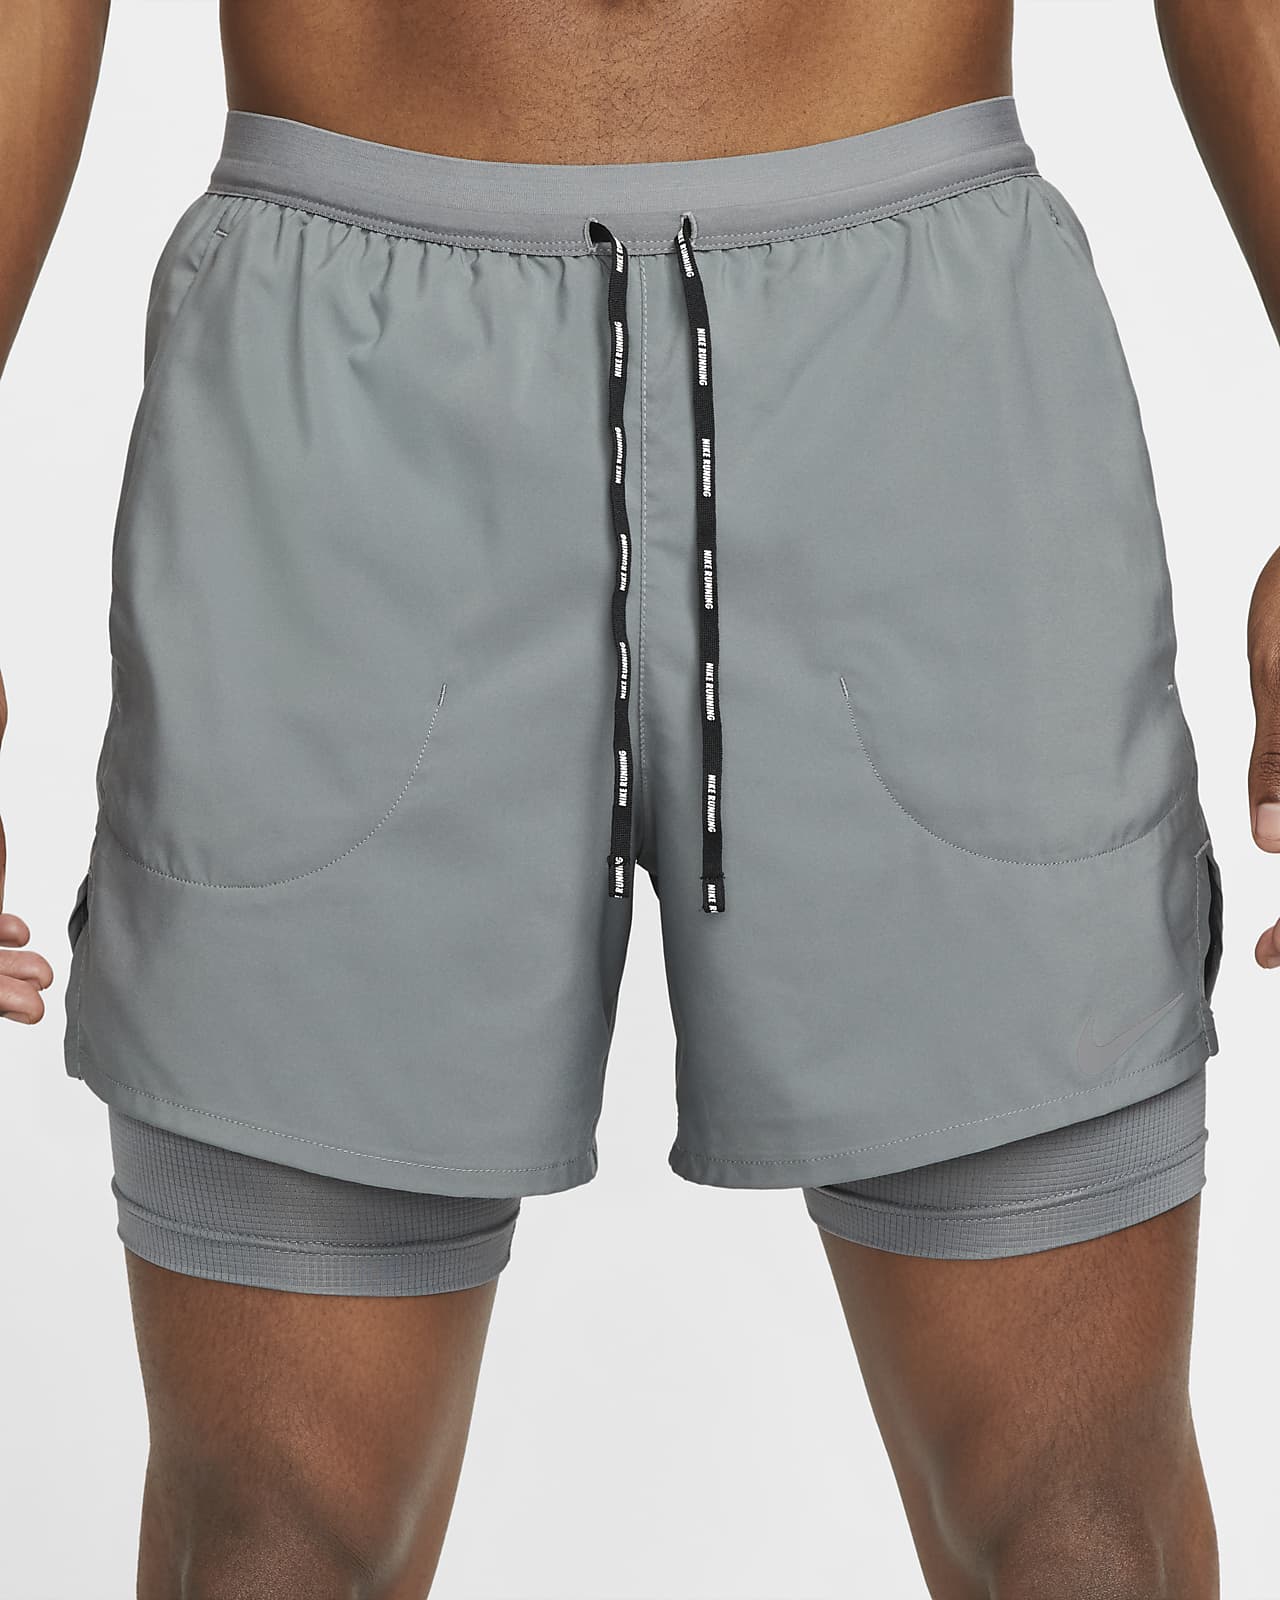 Nike Dri-fit Training Running Gym Sweat Pants Men's Size XL gray inseam 30  inch | eBay